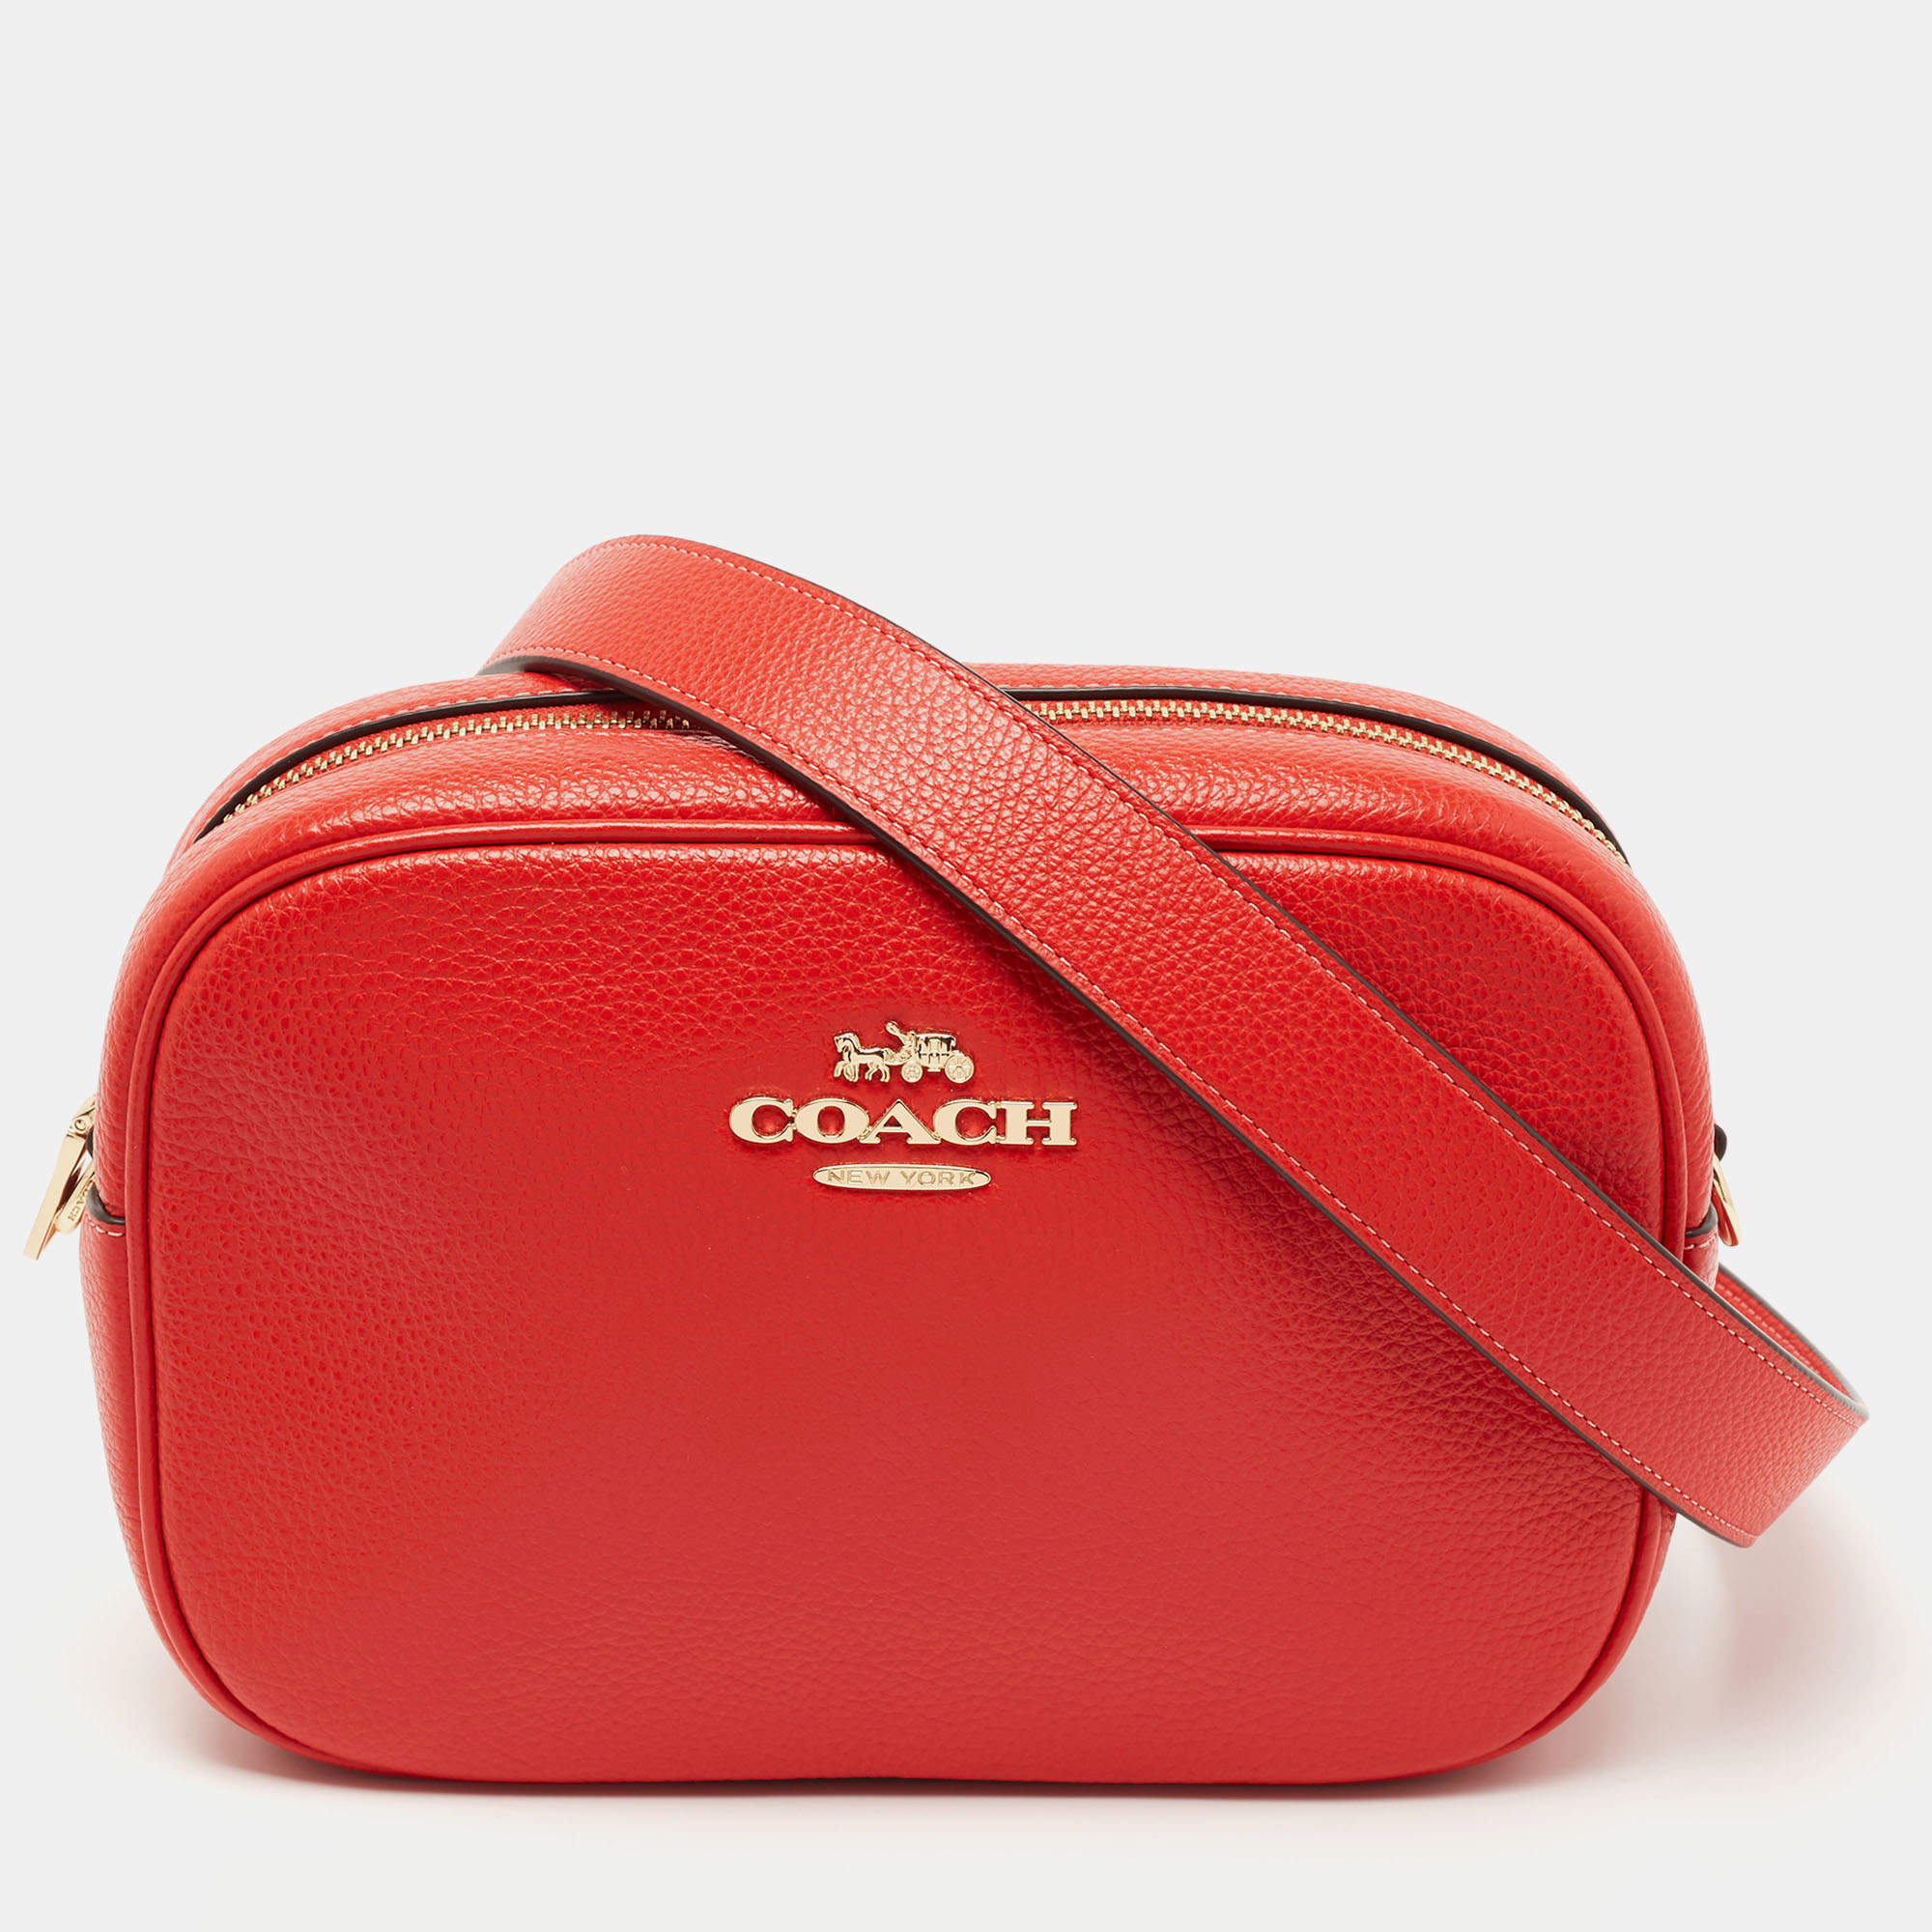 Gorgeous Red Coach Bag - Authentic Purse